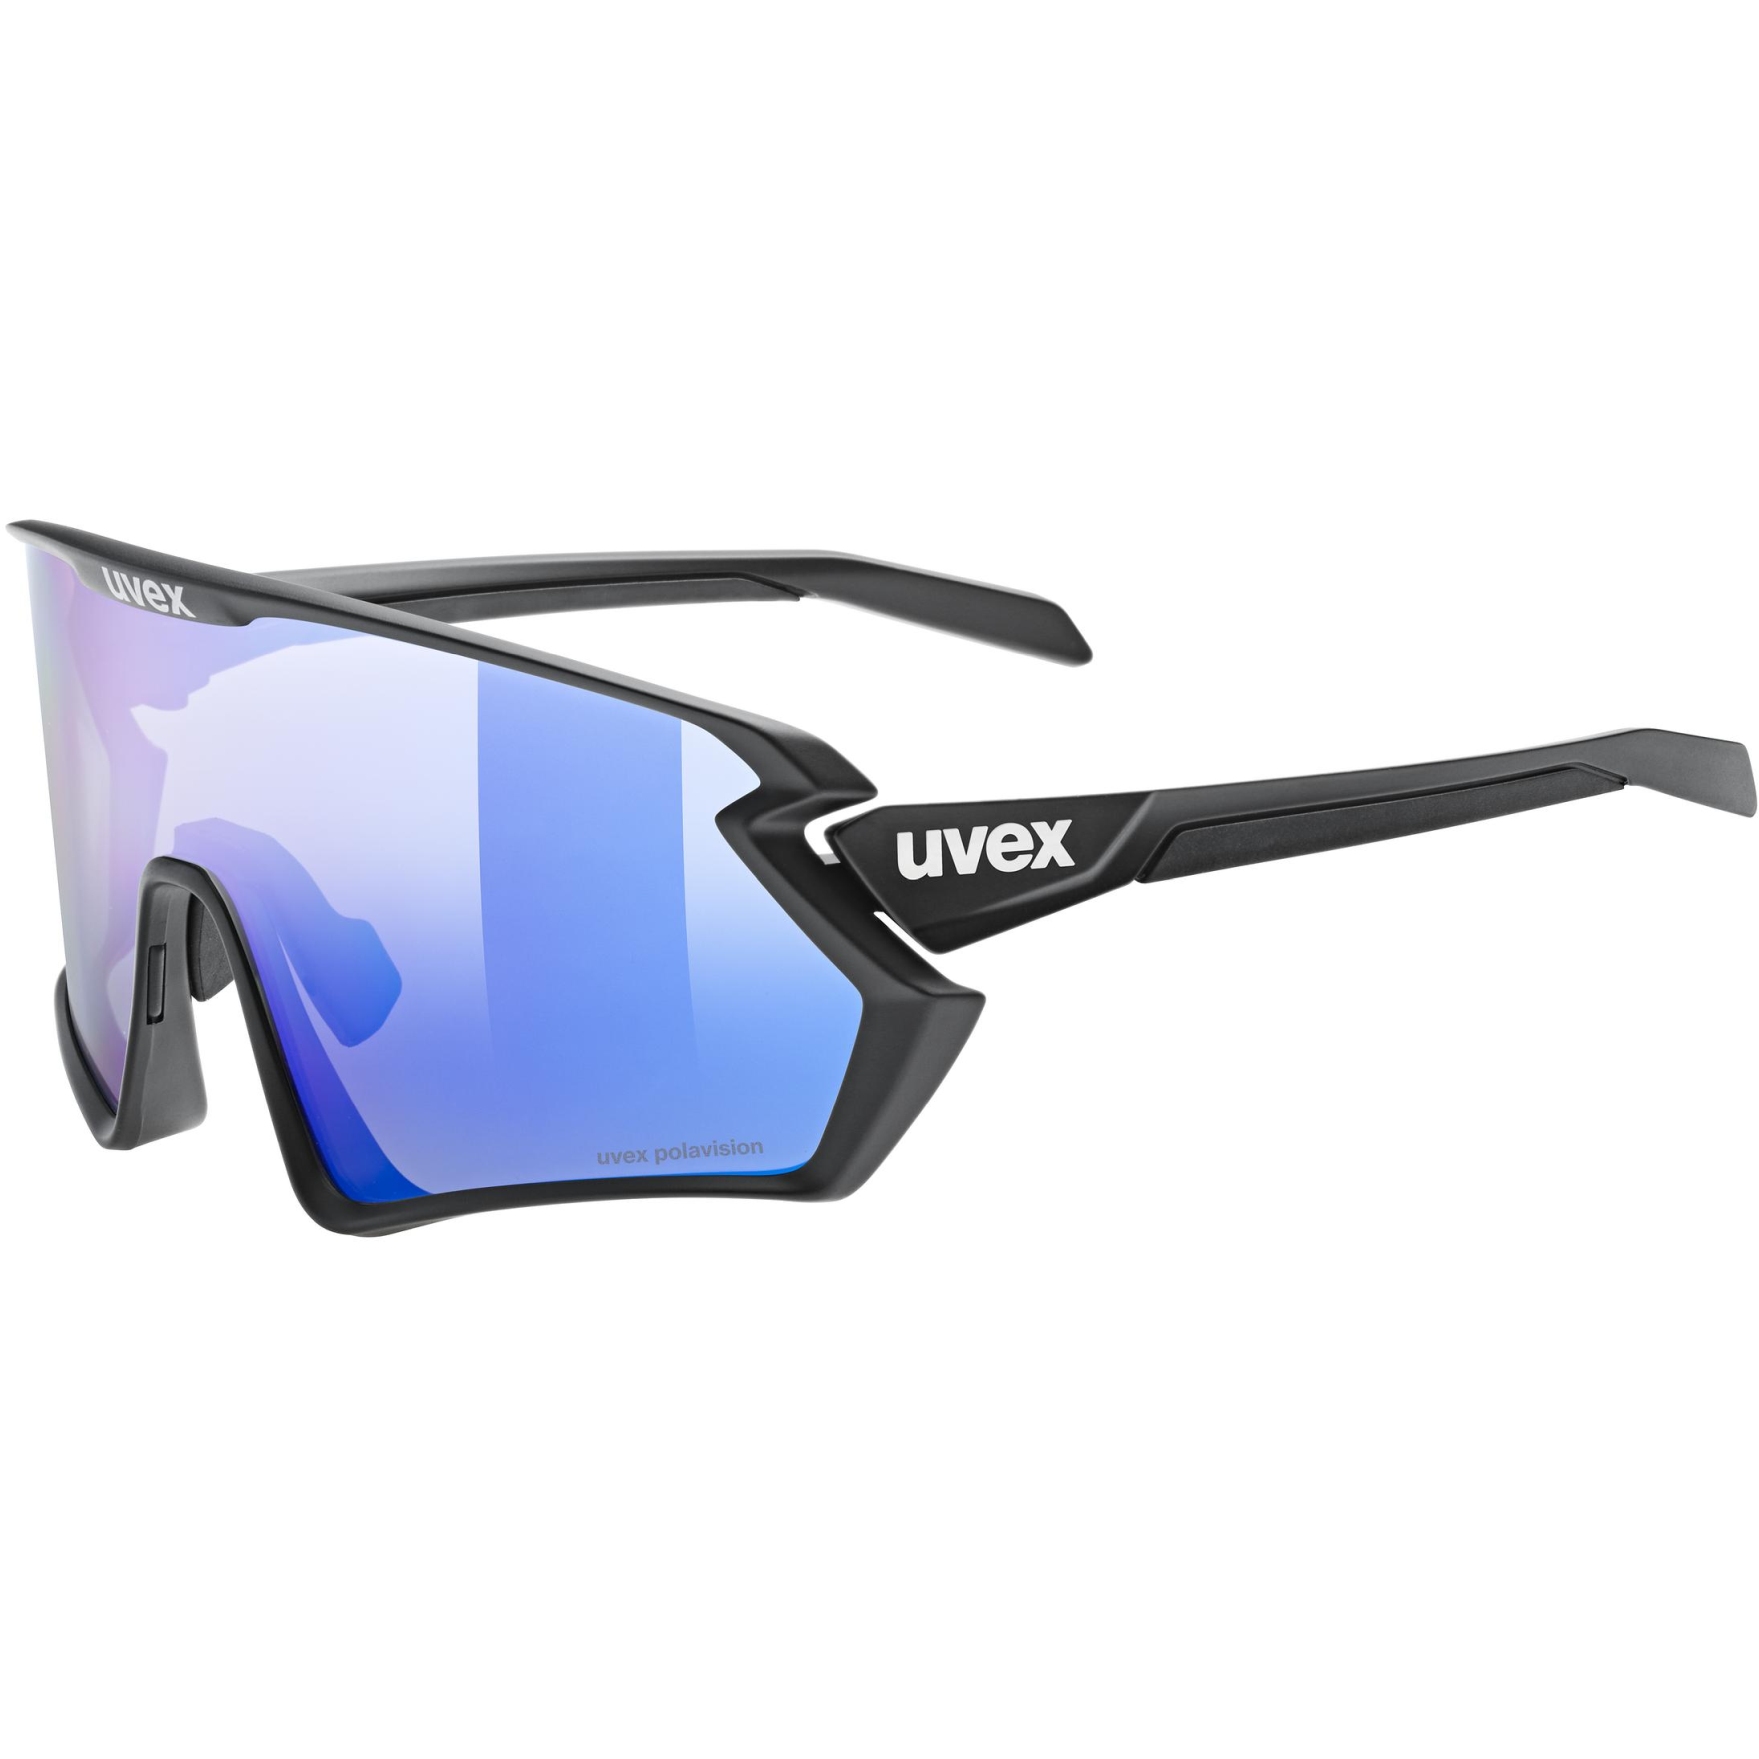 Productfoto van Uvex sportstyle 231 2.0 P Bril - black matt/polavision supravision mirror blue